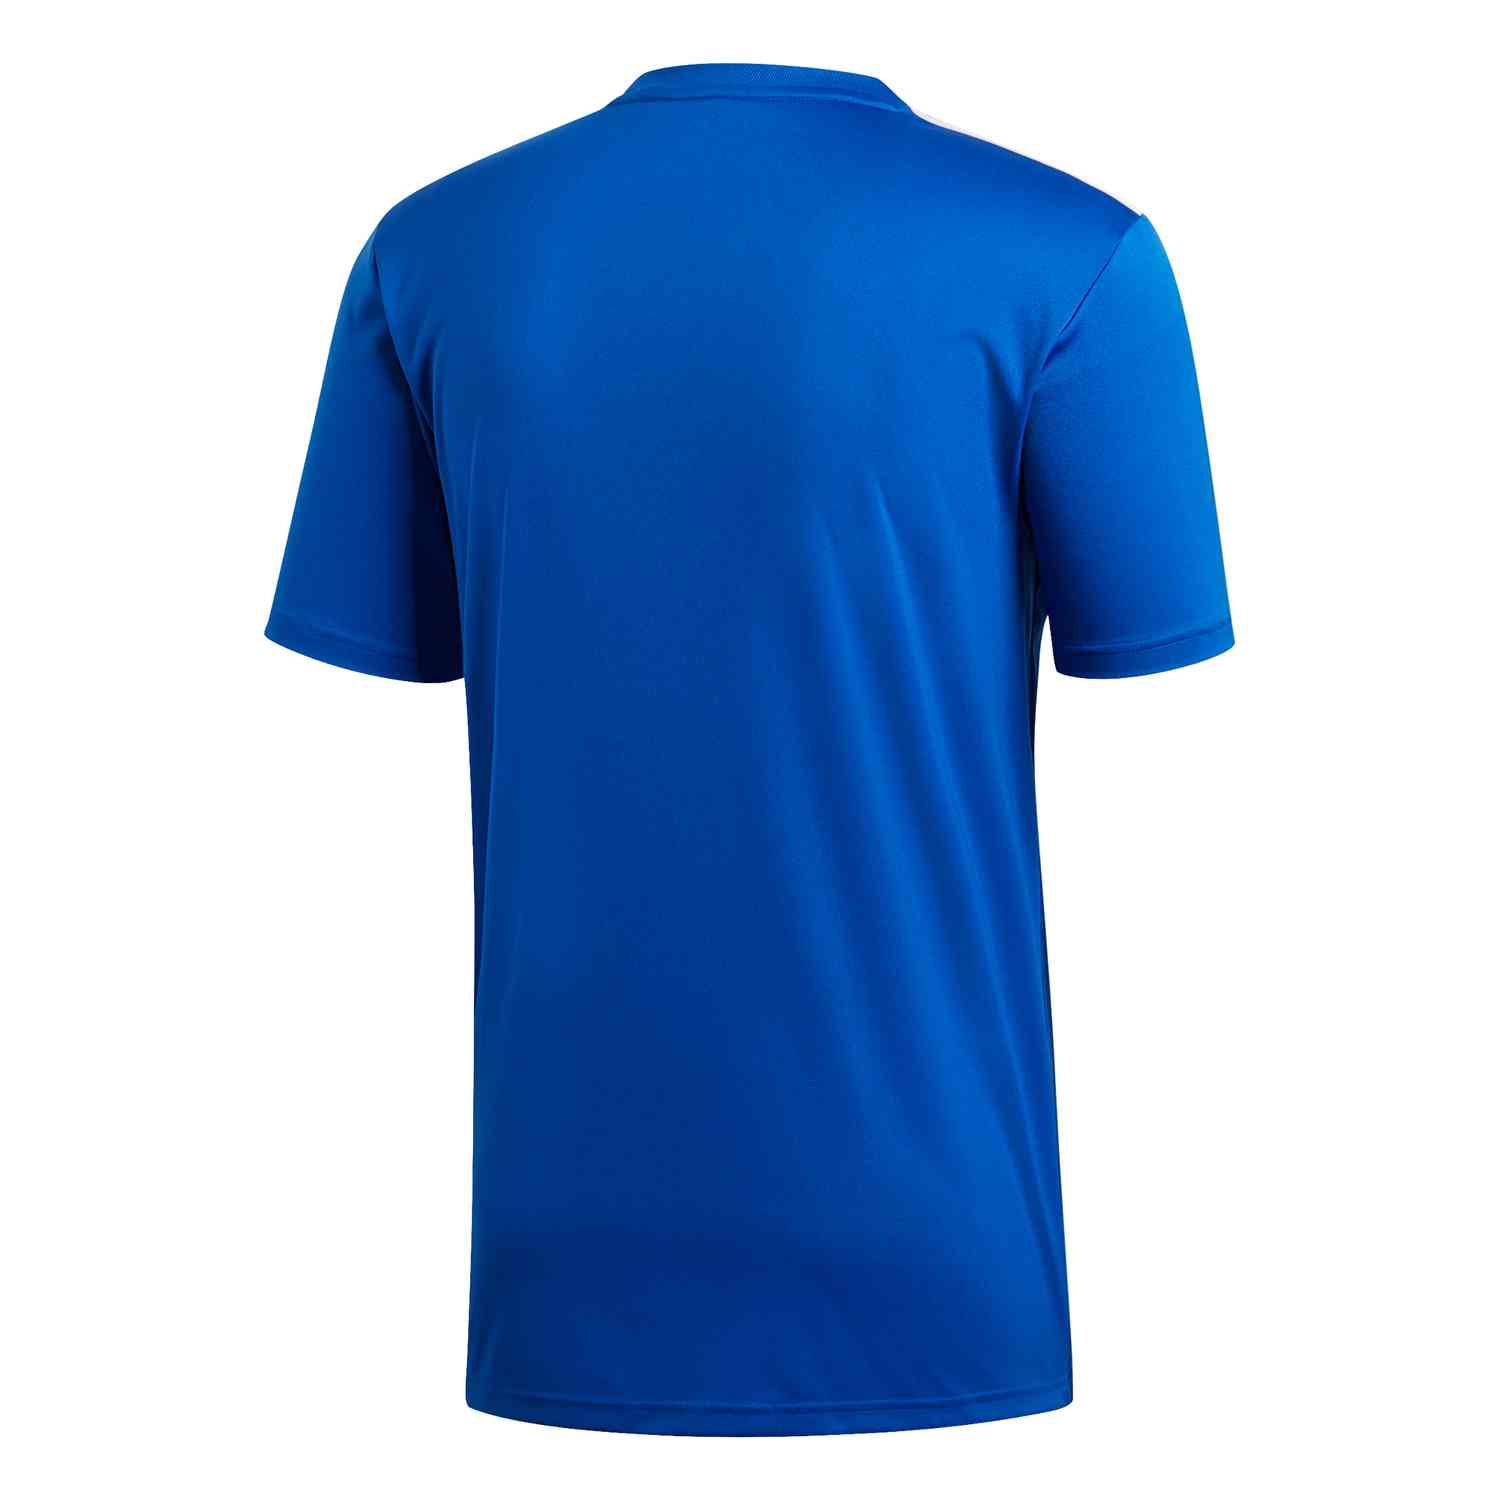 adidas Campeon 19 Jersey - Bold Blue/White - SoccerPro